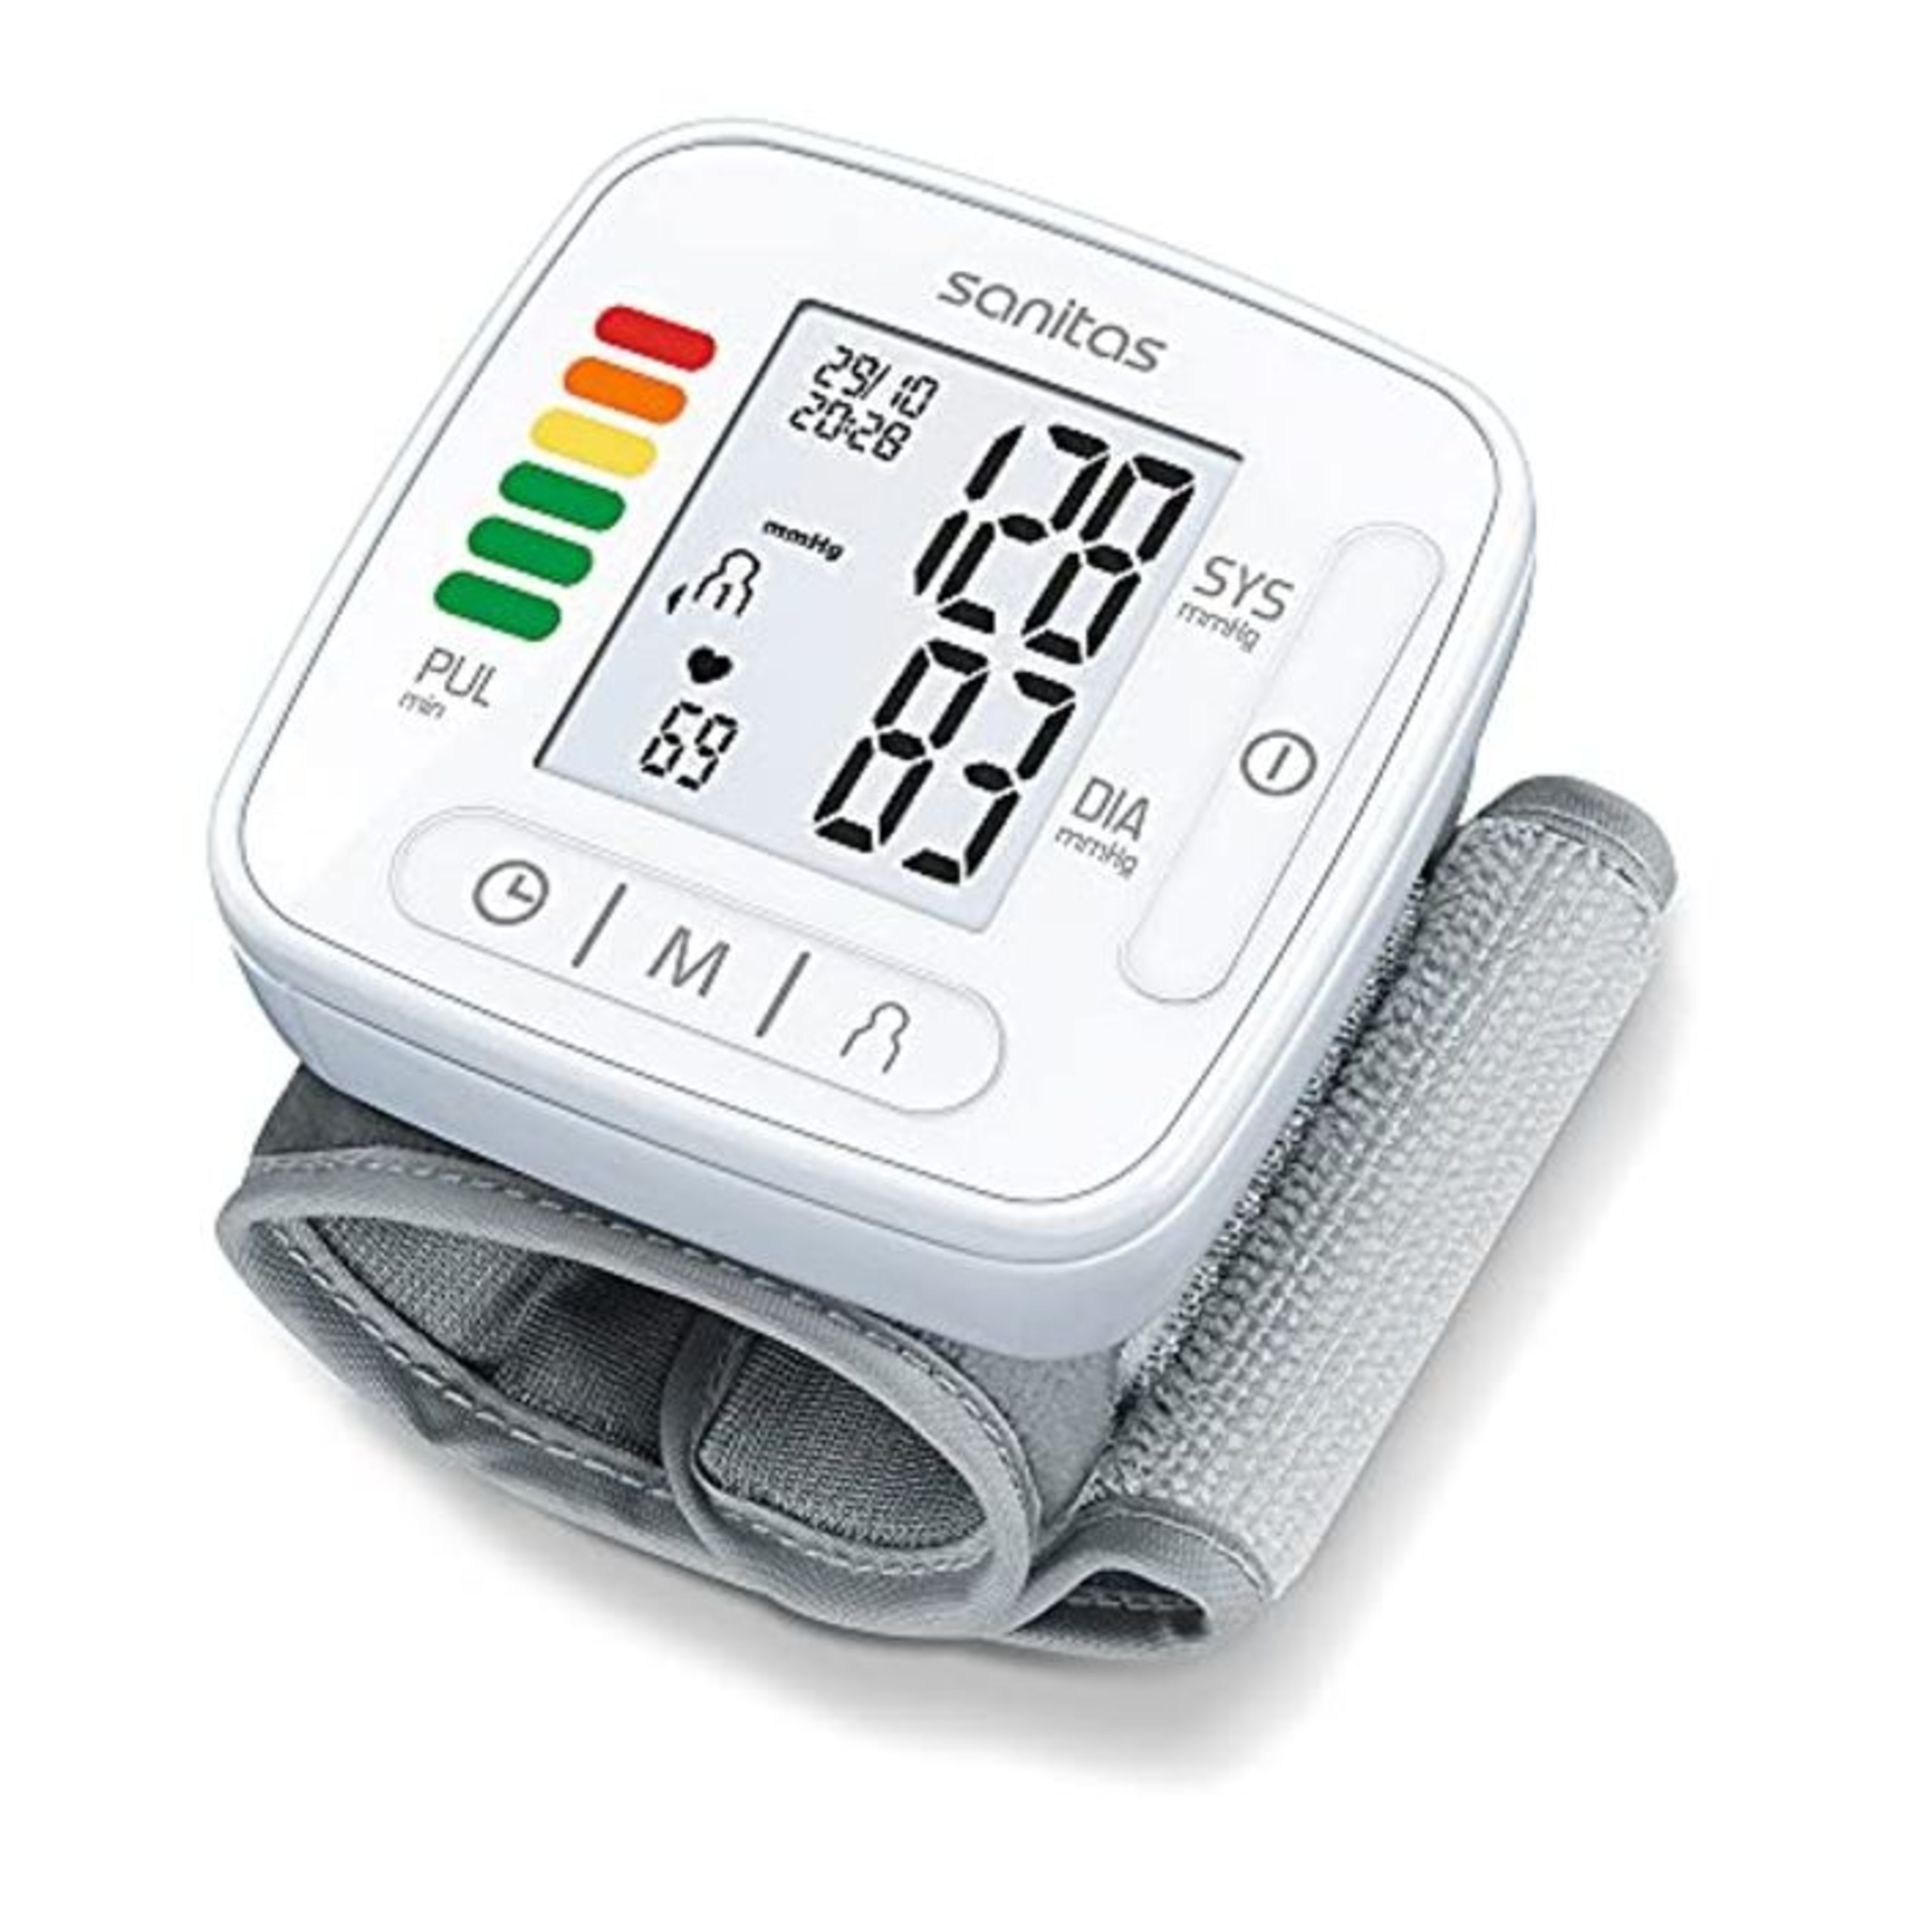 Sanitas SBC 15 Wrist Blood Pressure Monitor